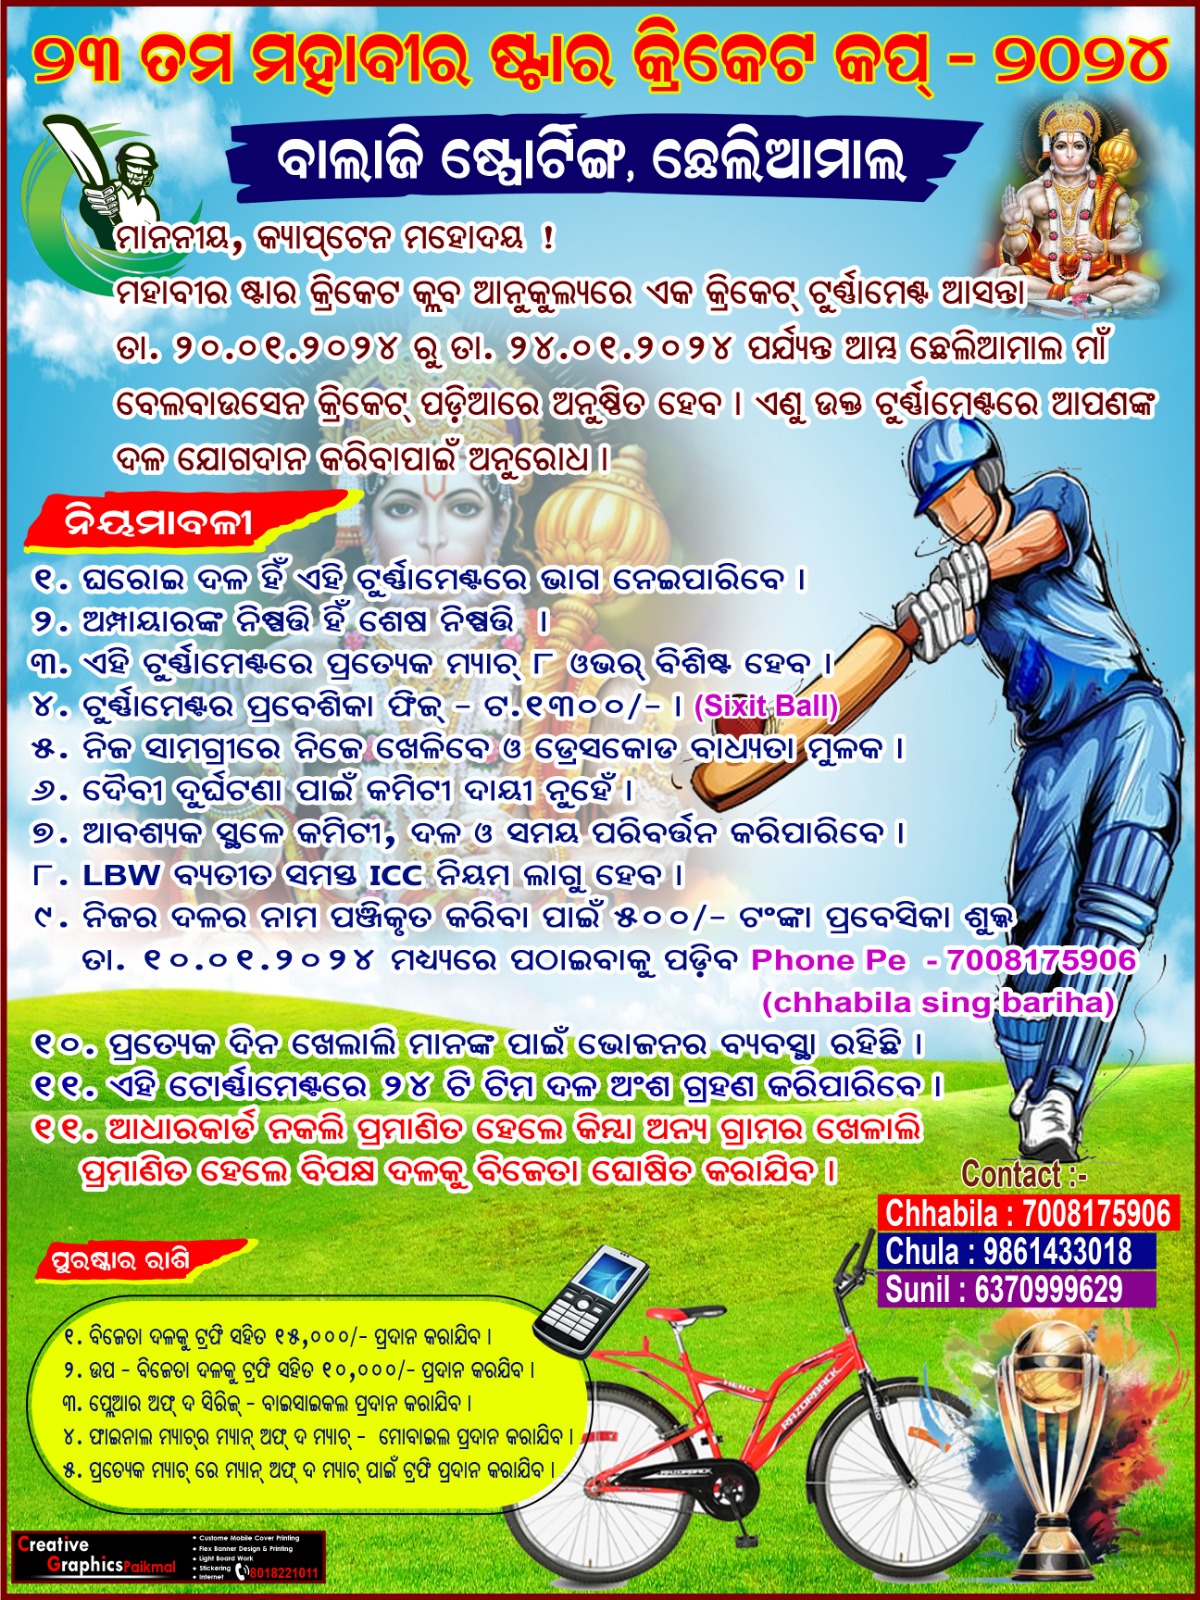 2th b11 cricket tournament 